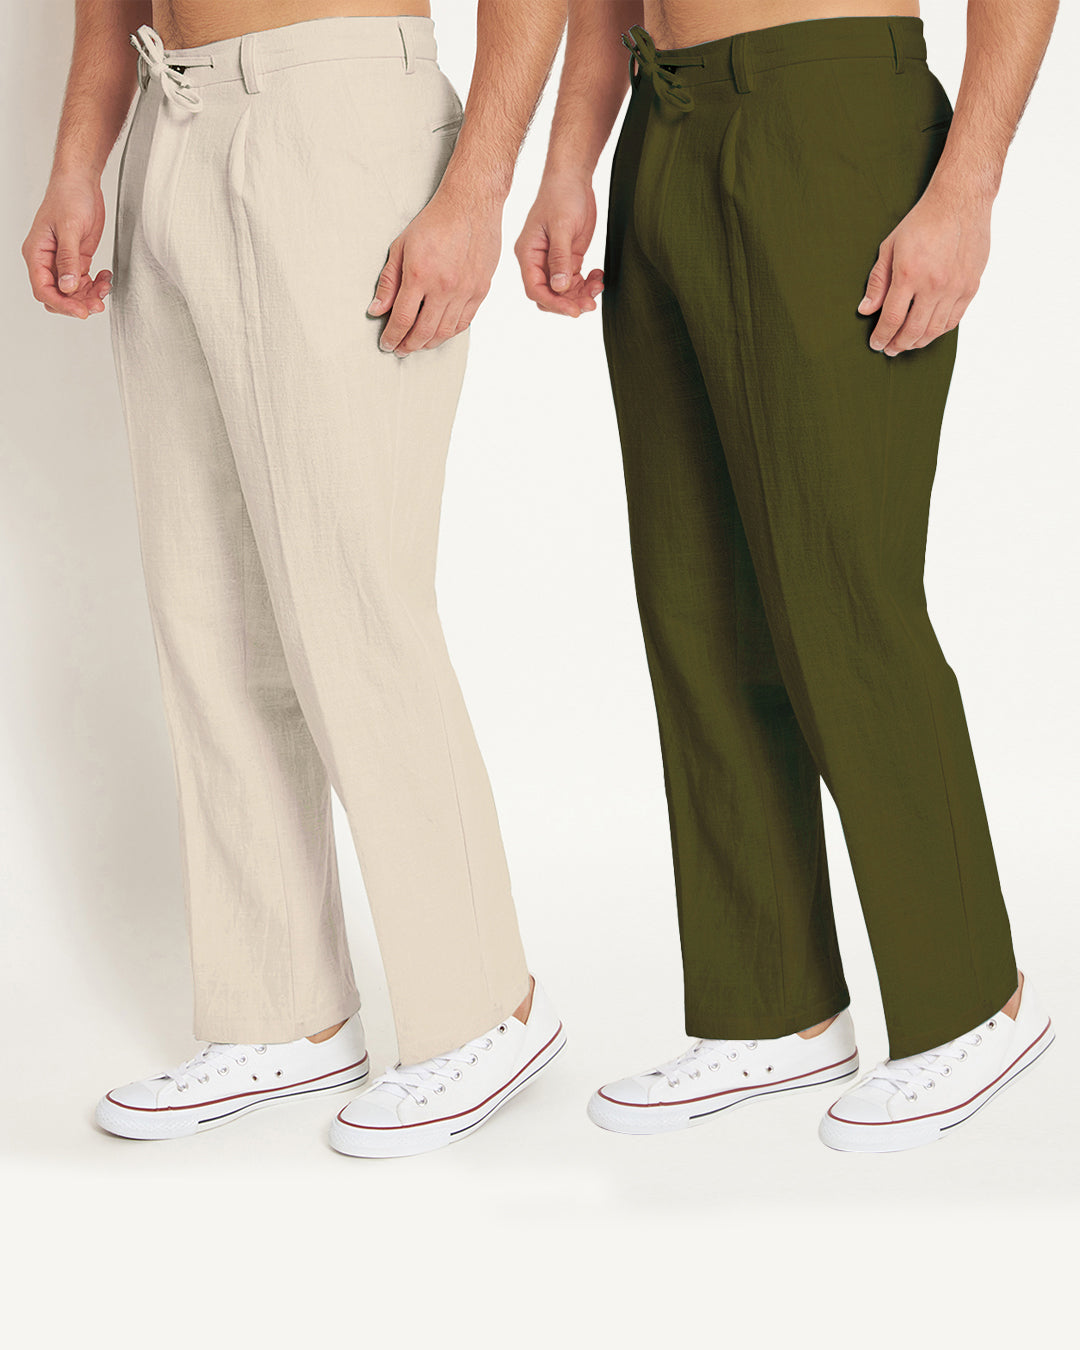 Combo: Casual Ease Beige & Olive Green Men's Pants - Set of 2